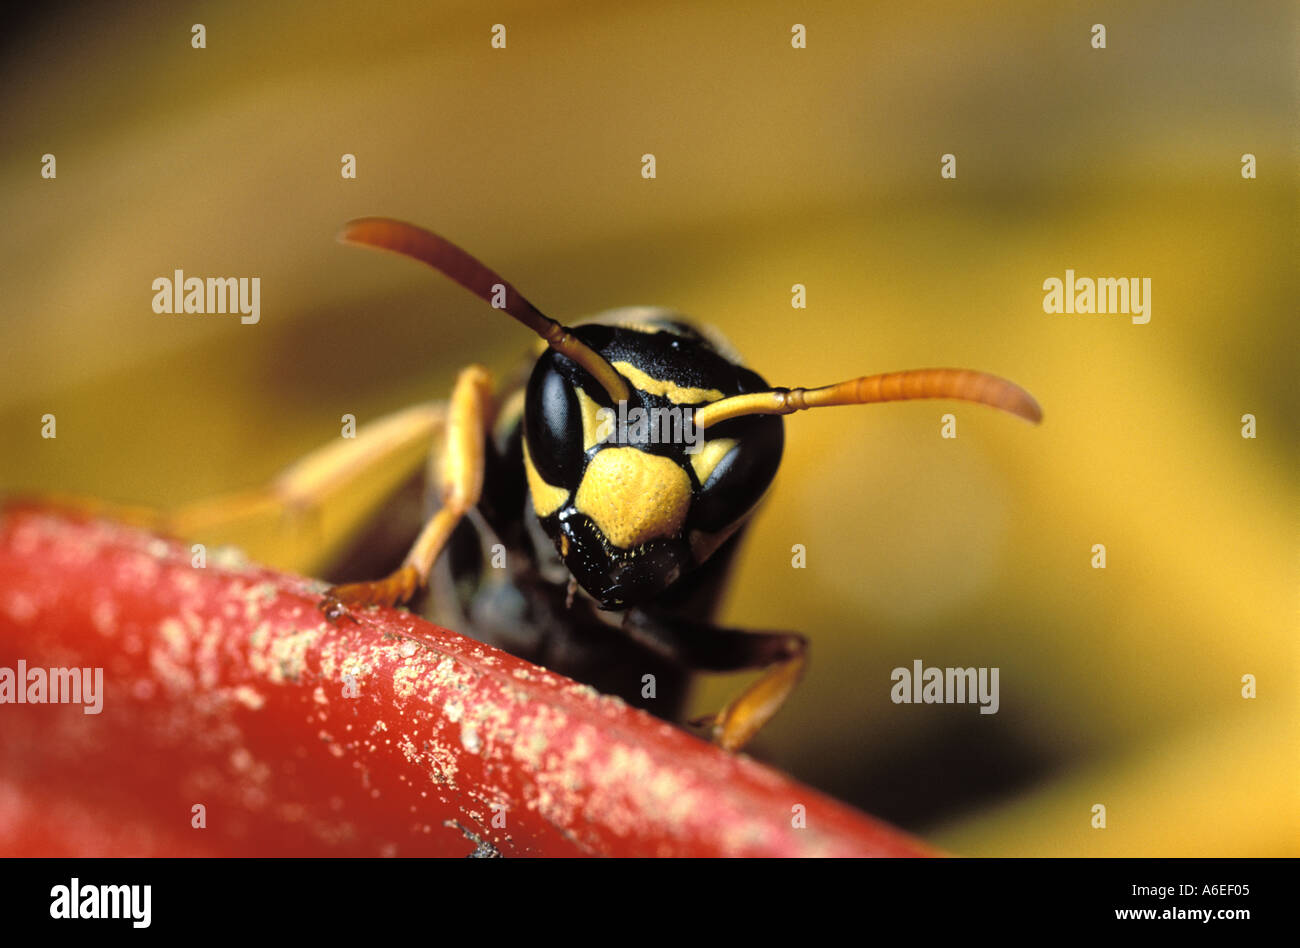 Polistes gallicus yellow jacket paper wasp portrait Stock Photo